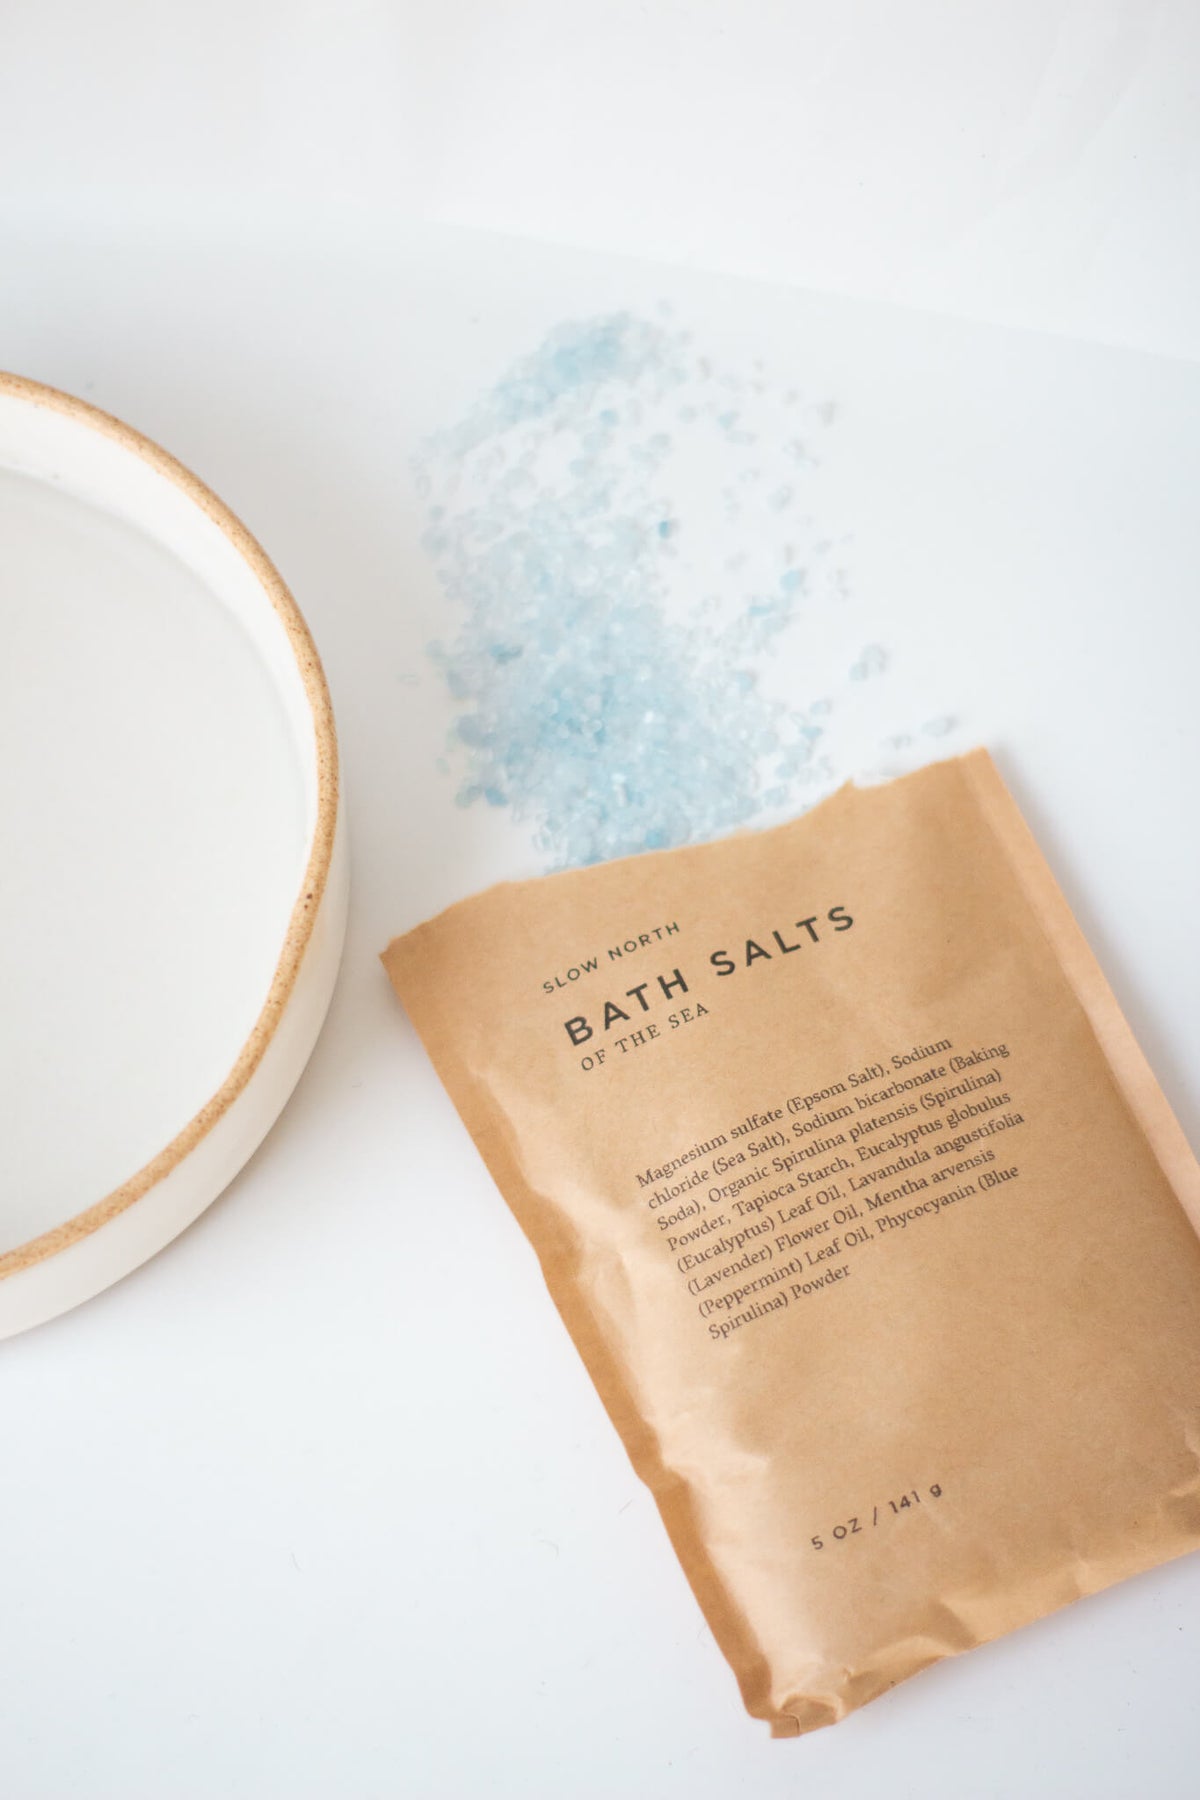 Slow North Of The Sea Single-Serve Bath Salts